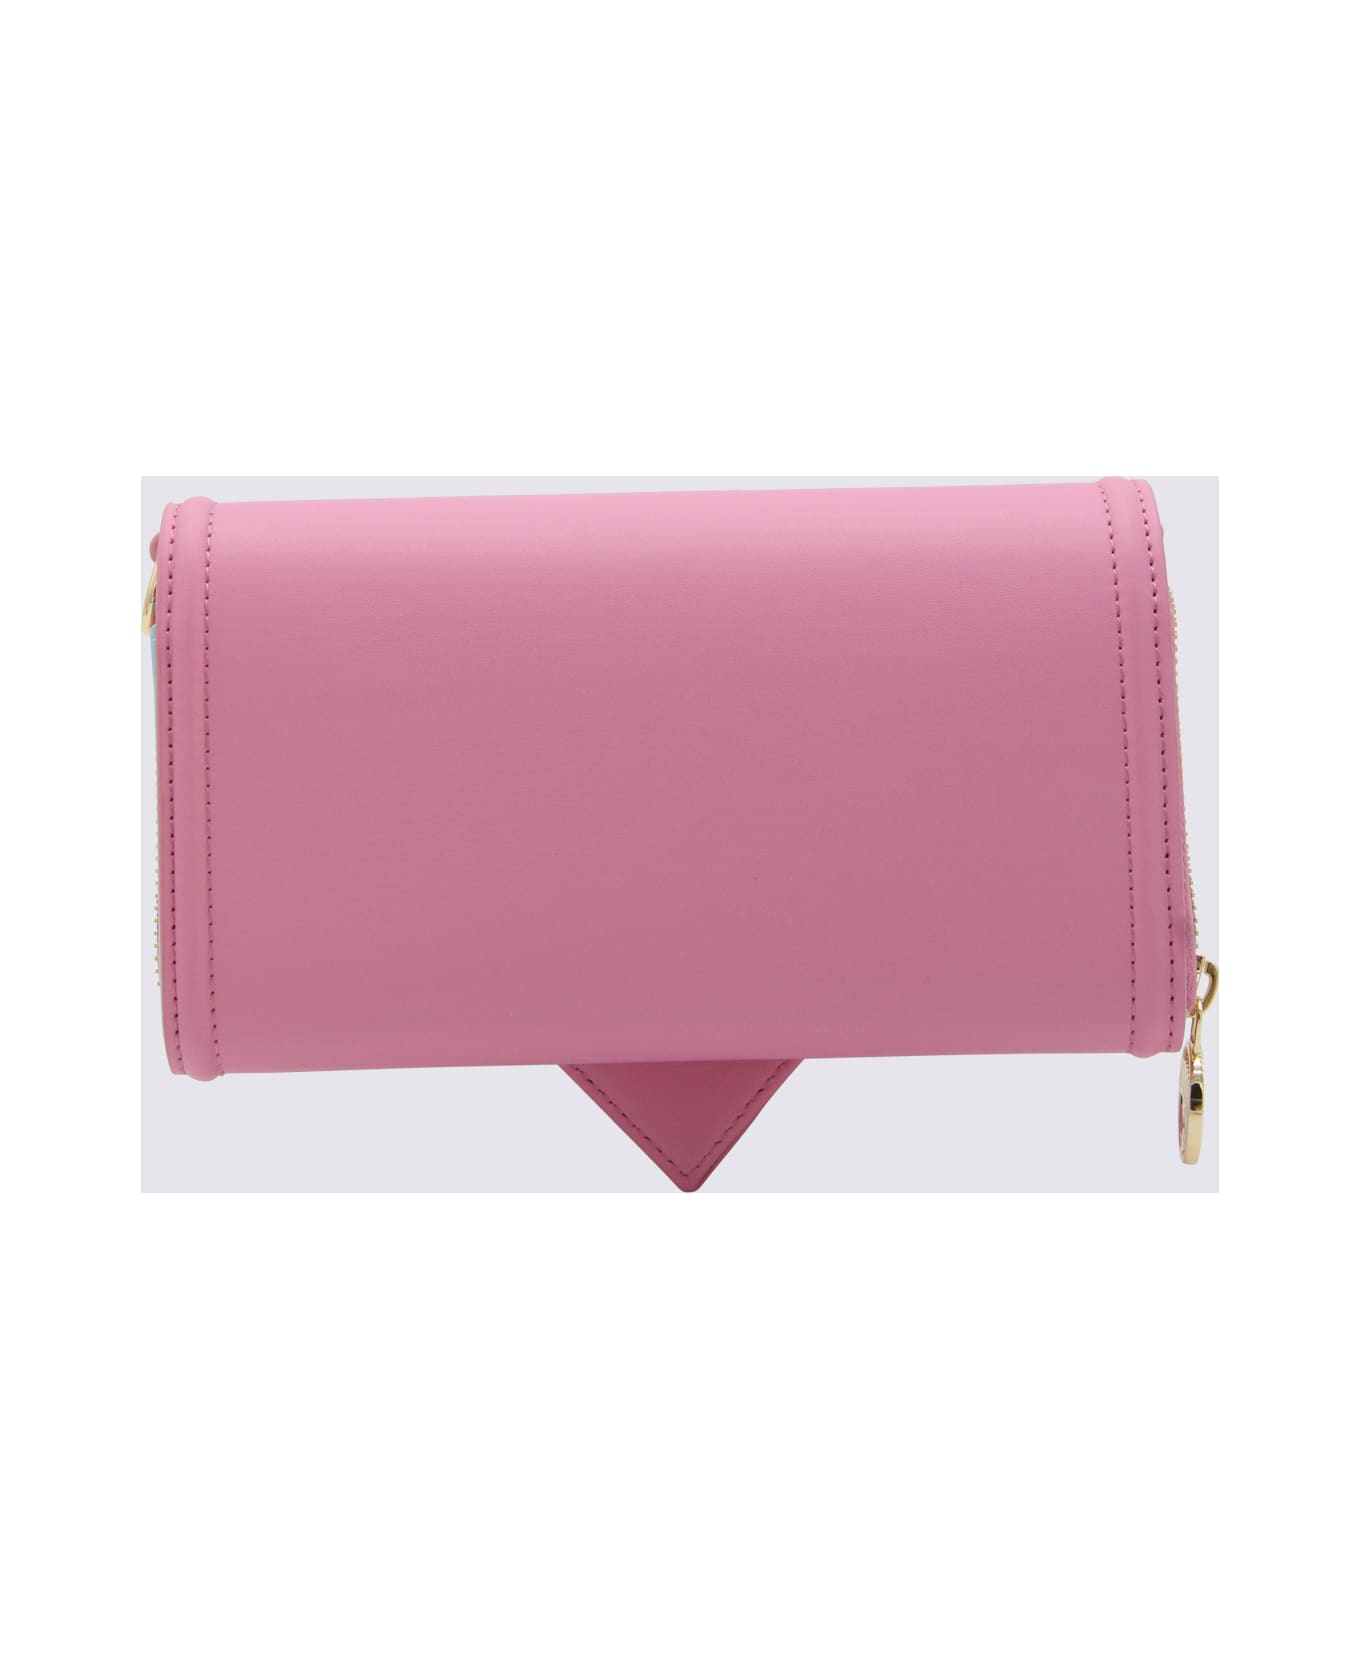 Chiara Ferragni Pink Crossbody Bag - Fuchsia ショルダーバッグ